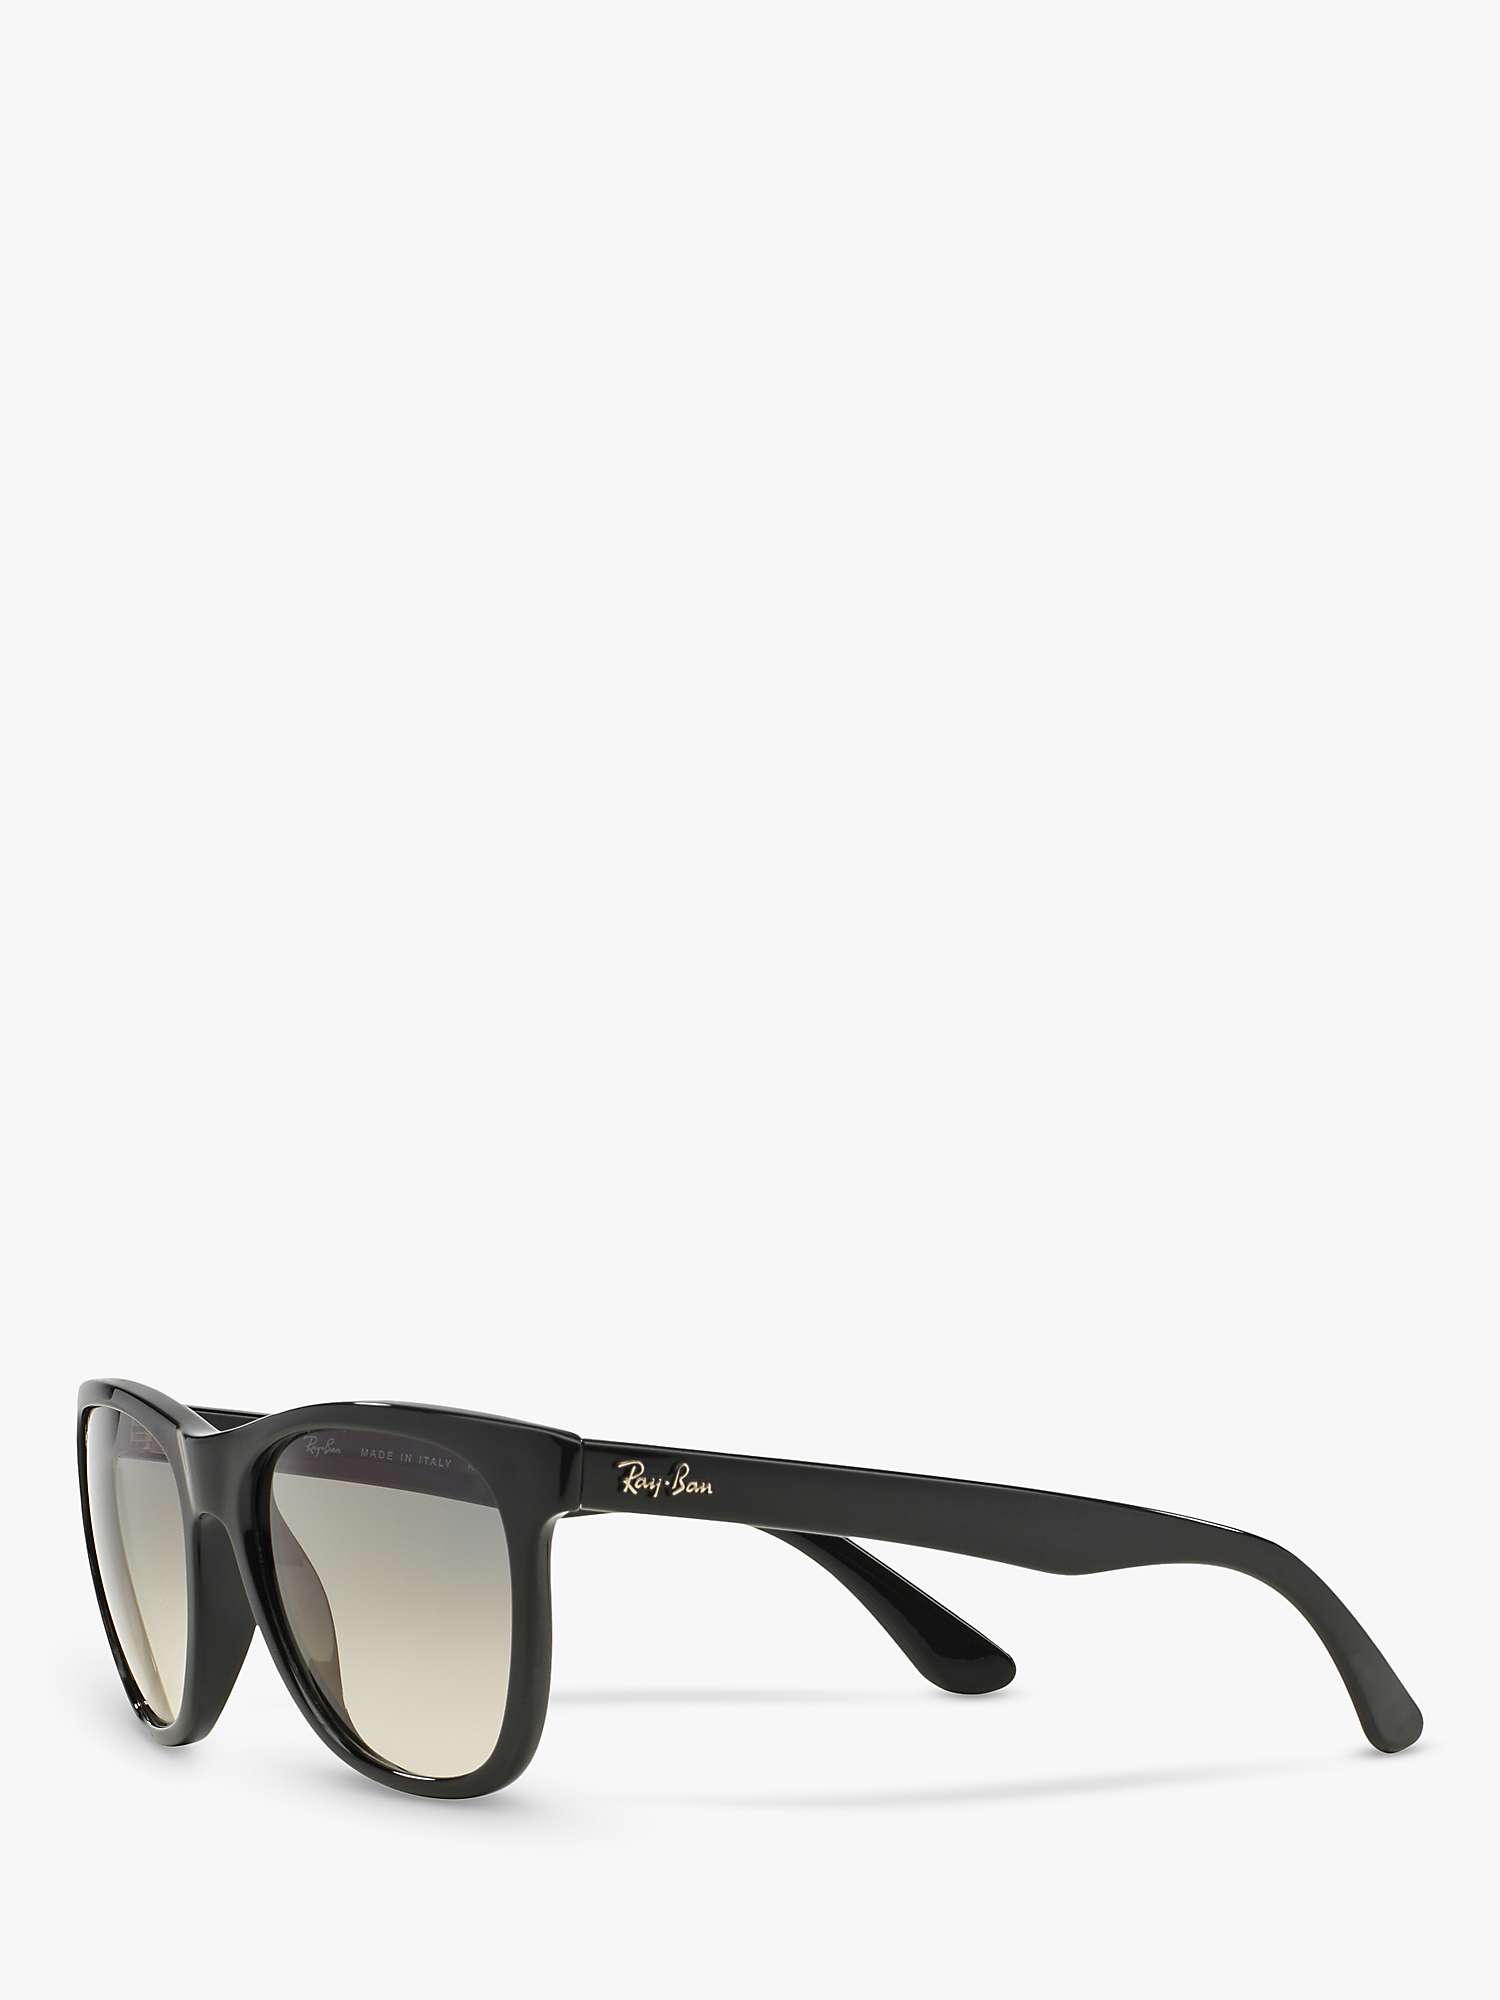 Buy Ray-Ban RB4184 Men's Square Sunglassess, Black/Grey Online at johnlewis.com